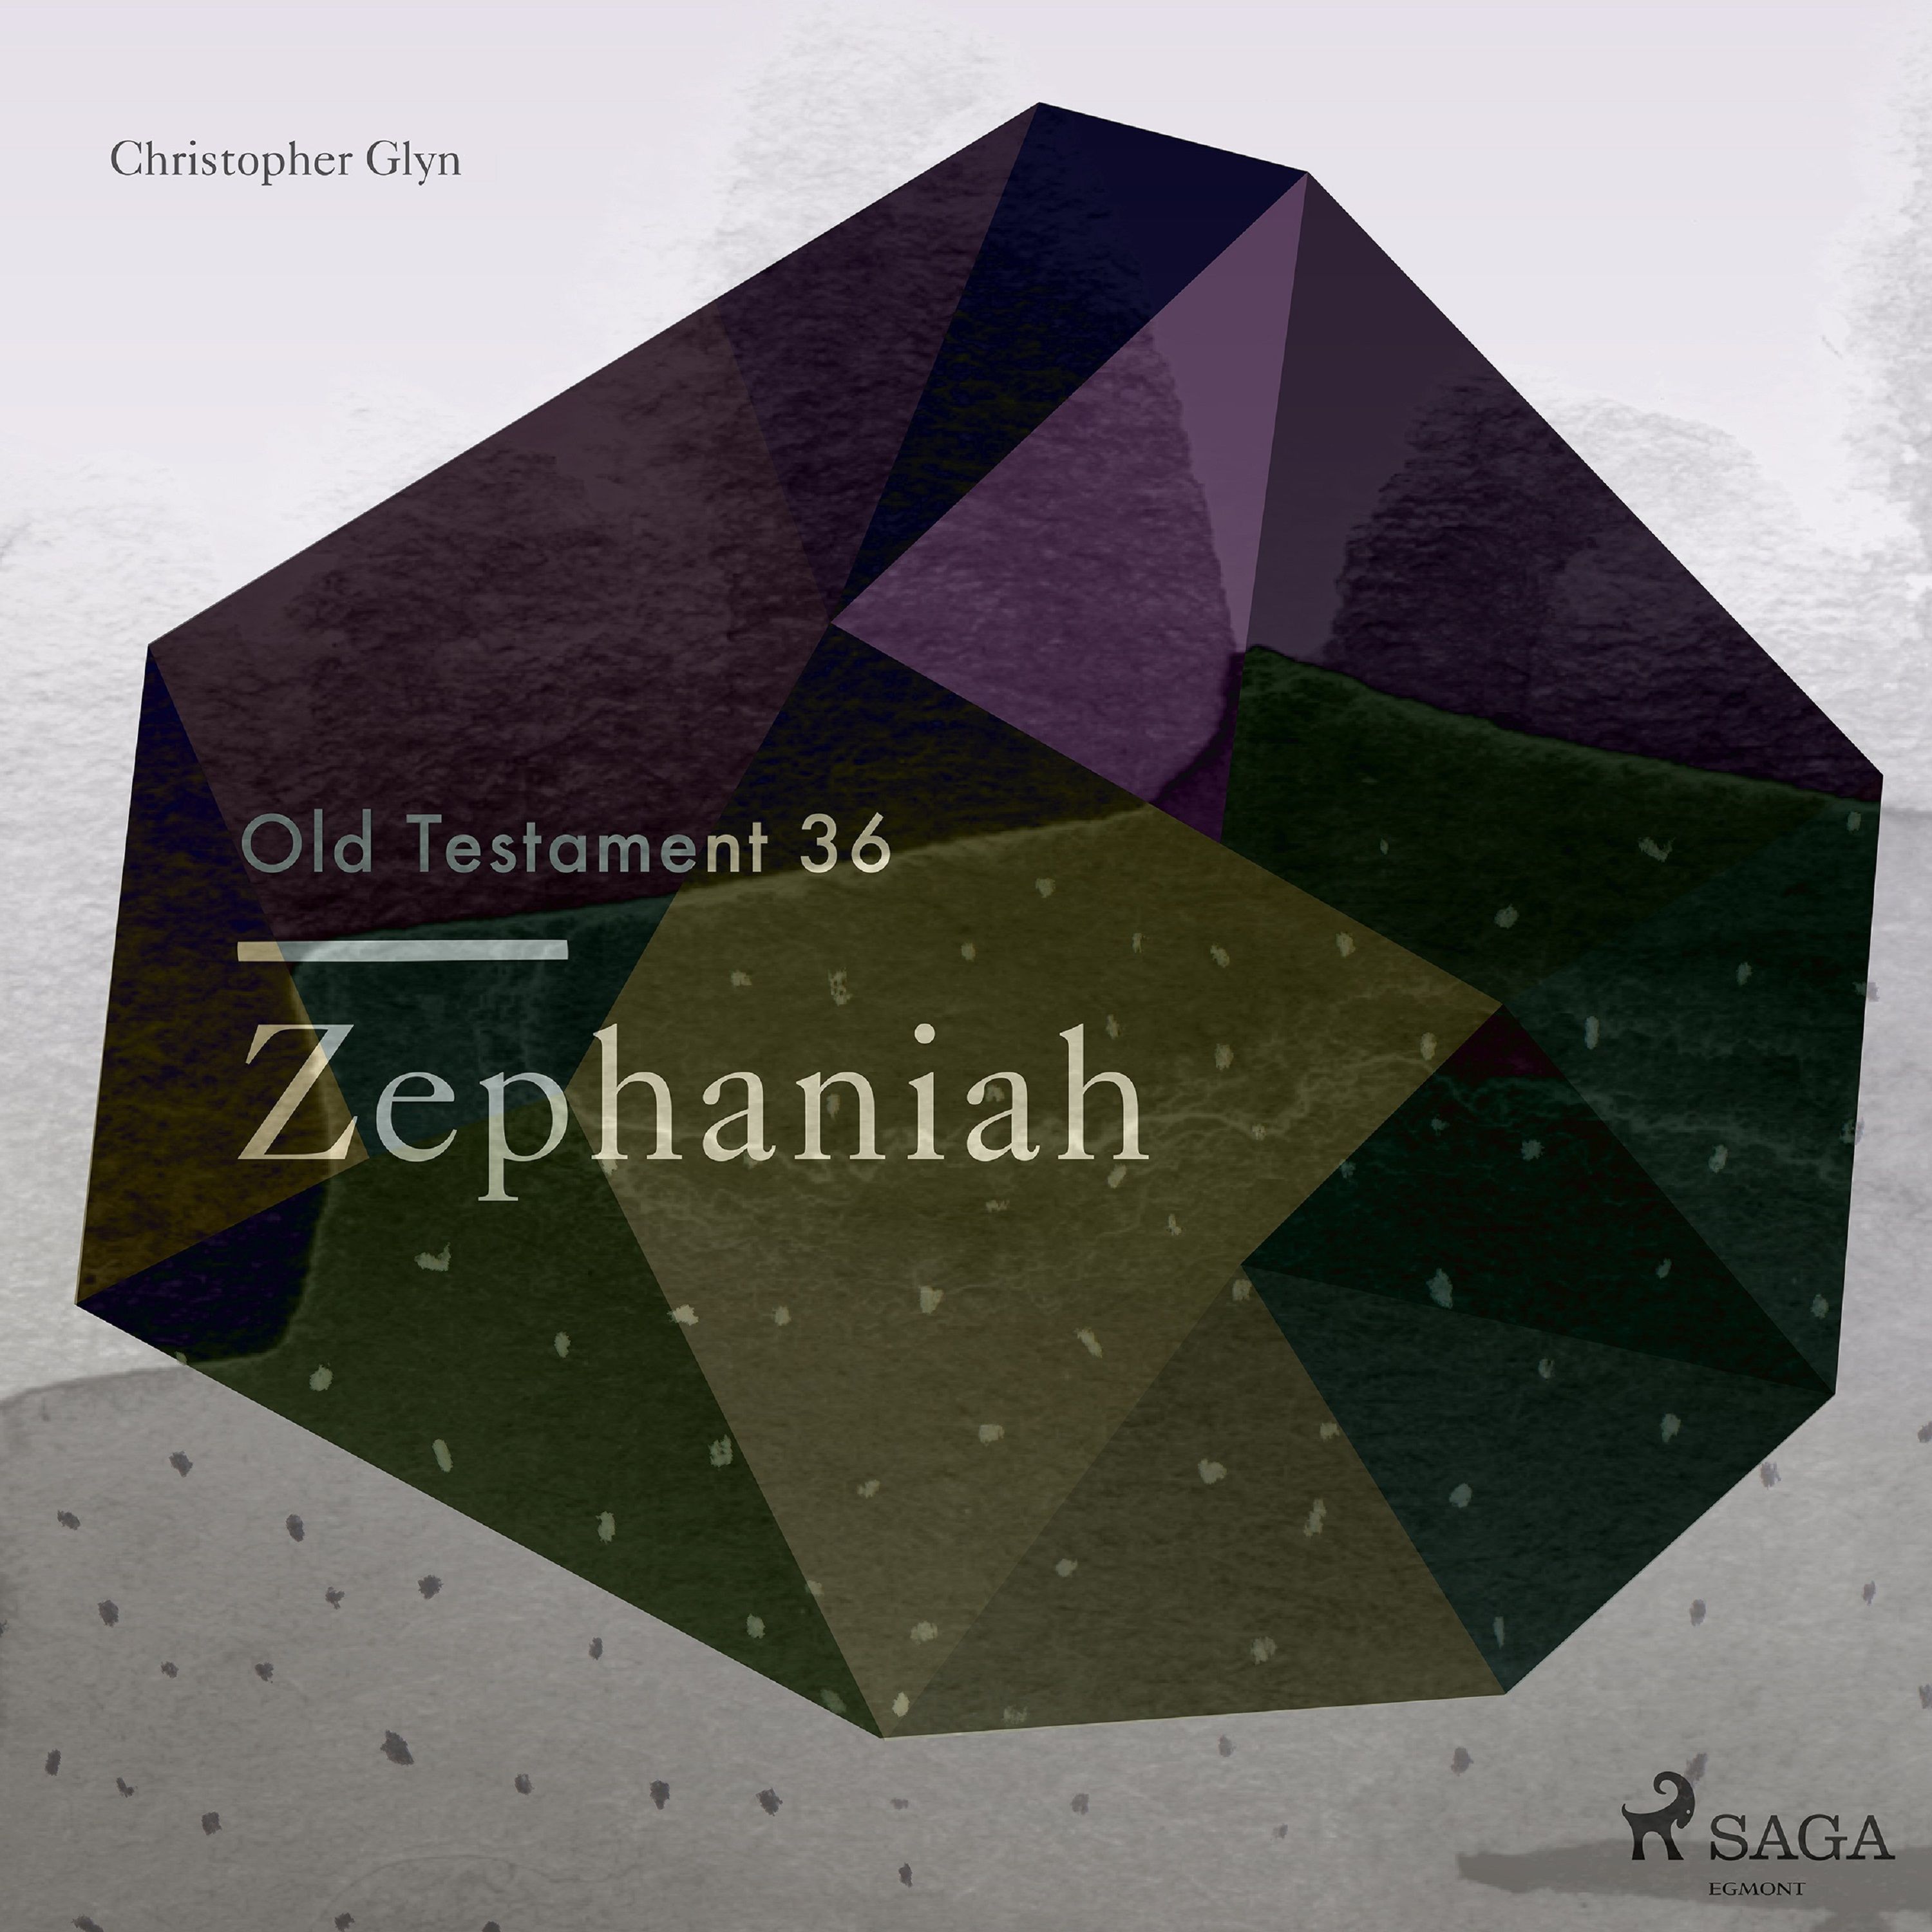 The Old Testament 36 - Zephaniah, ljudbok av Christopher Glyn